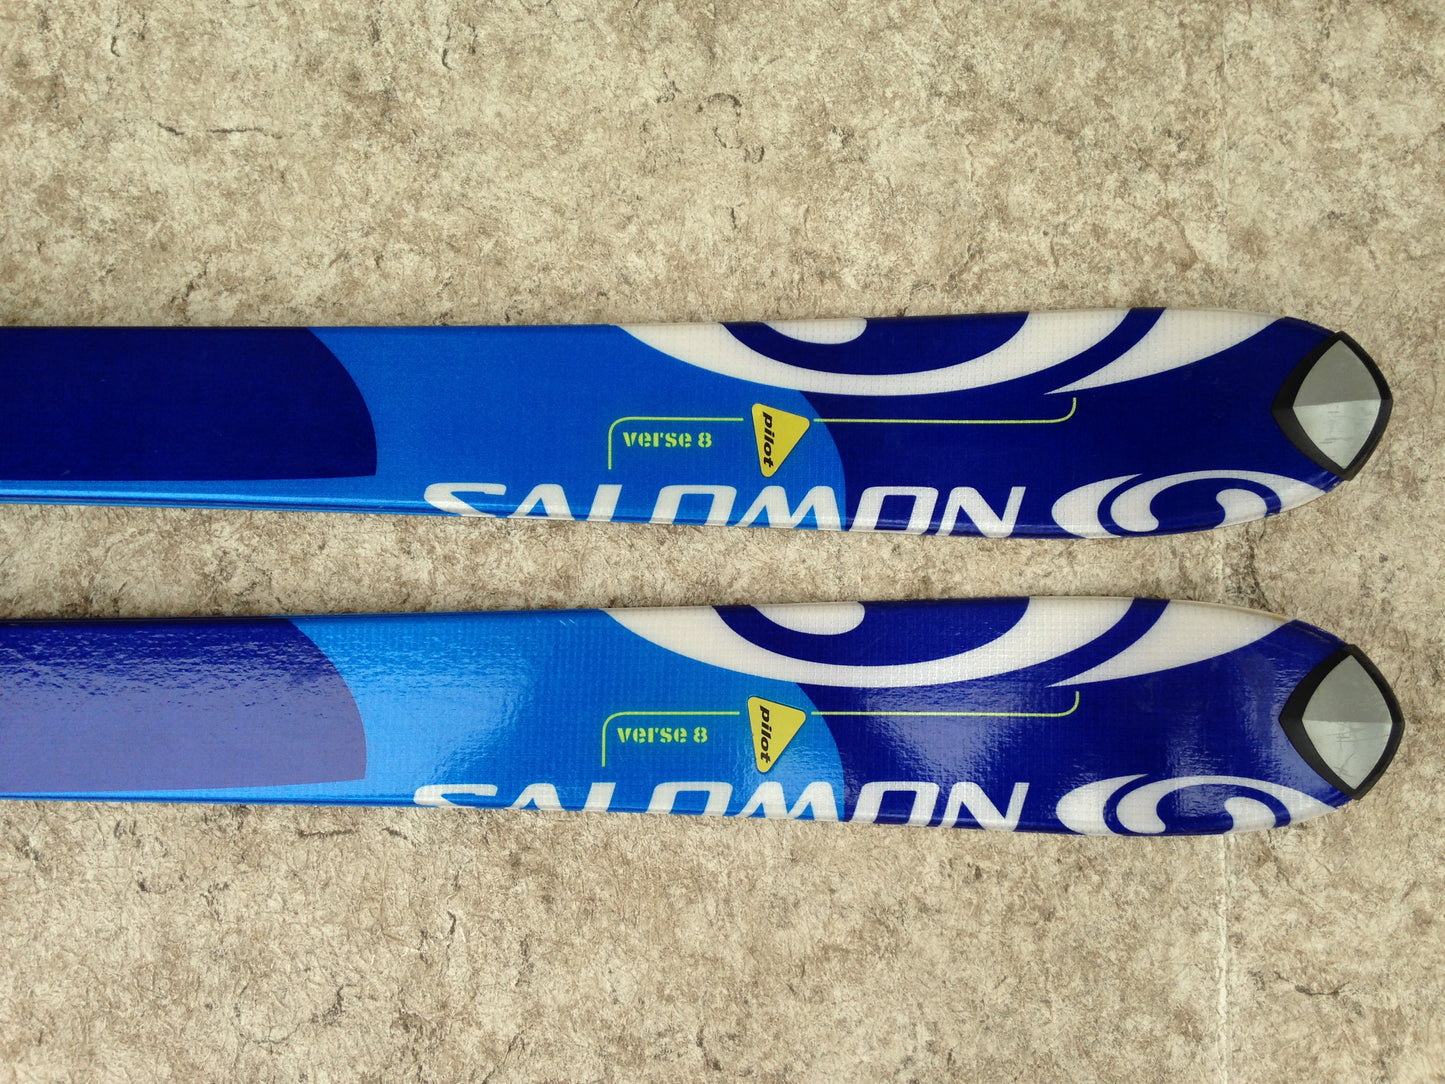 Ski 150 Salomon Blue White Parabolic With Bindings As New